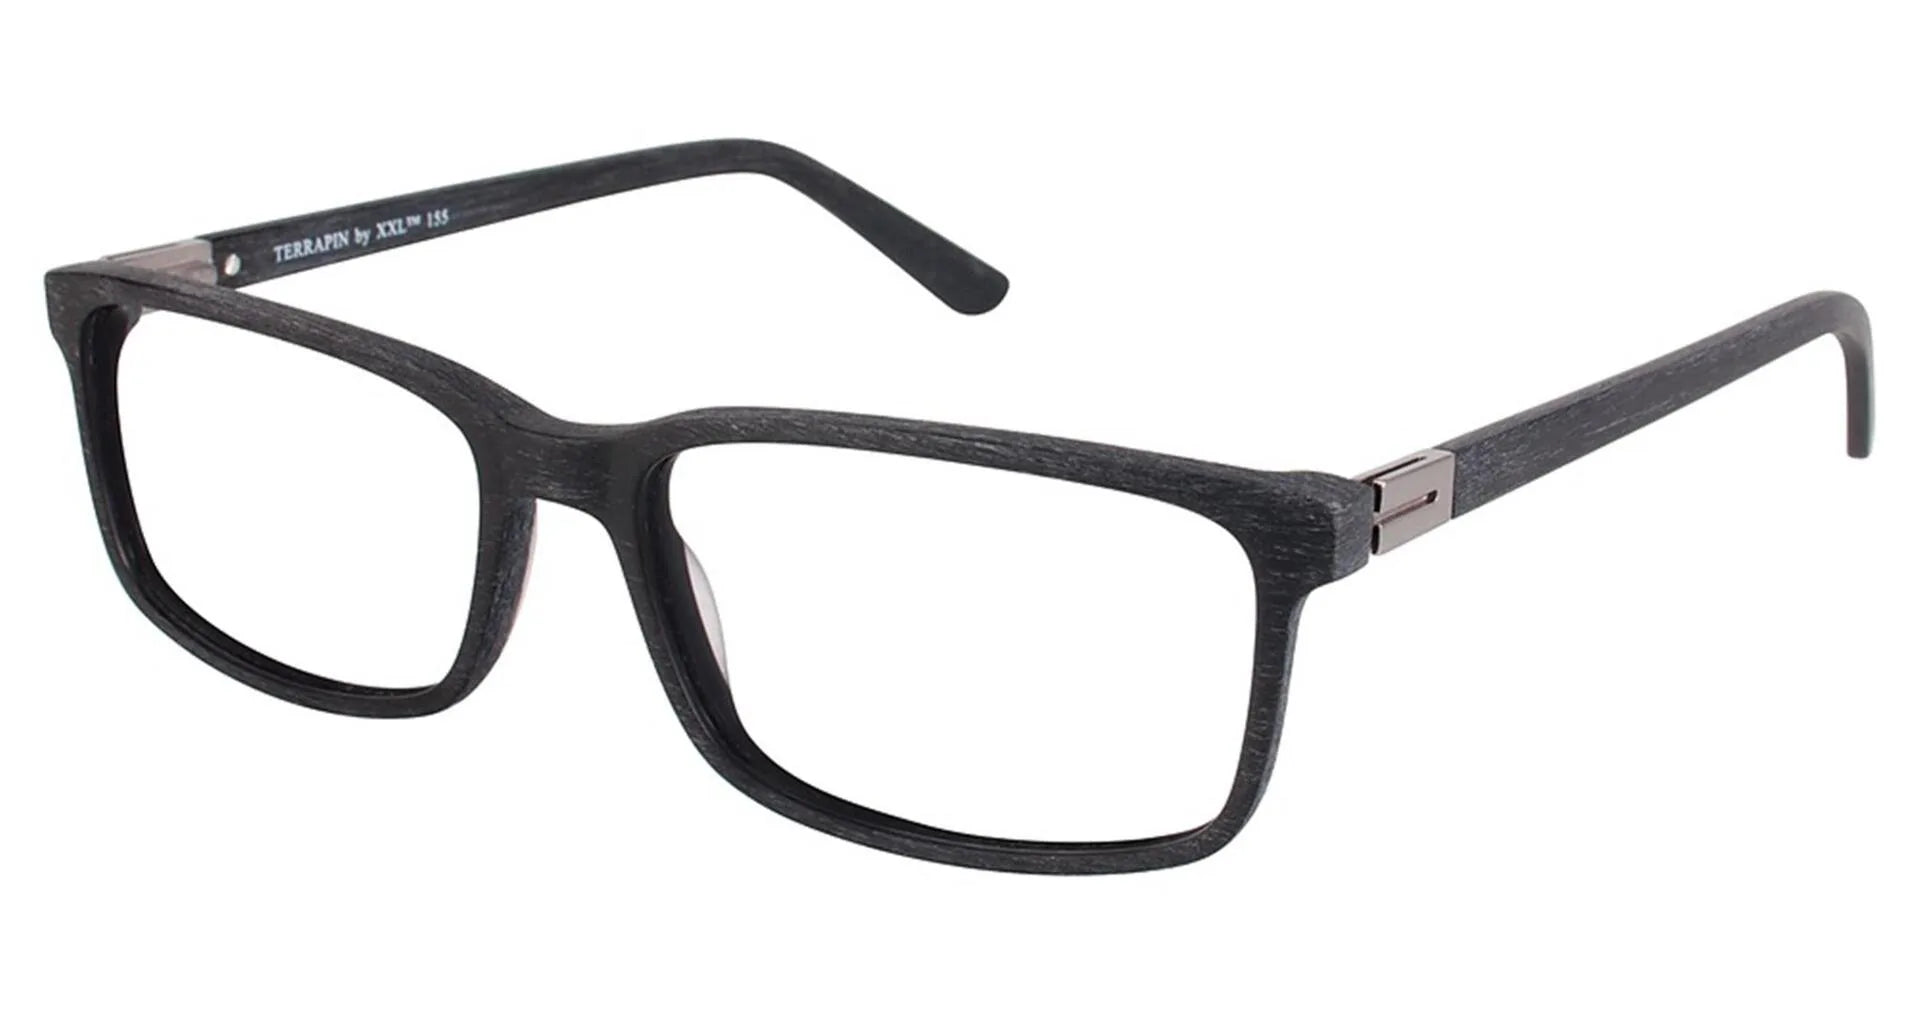 XXL Eyewear Terrapin Eyeglasses Black